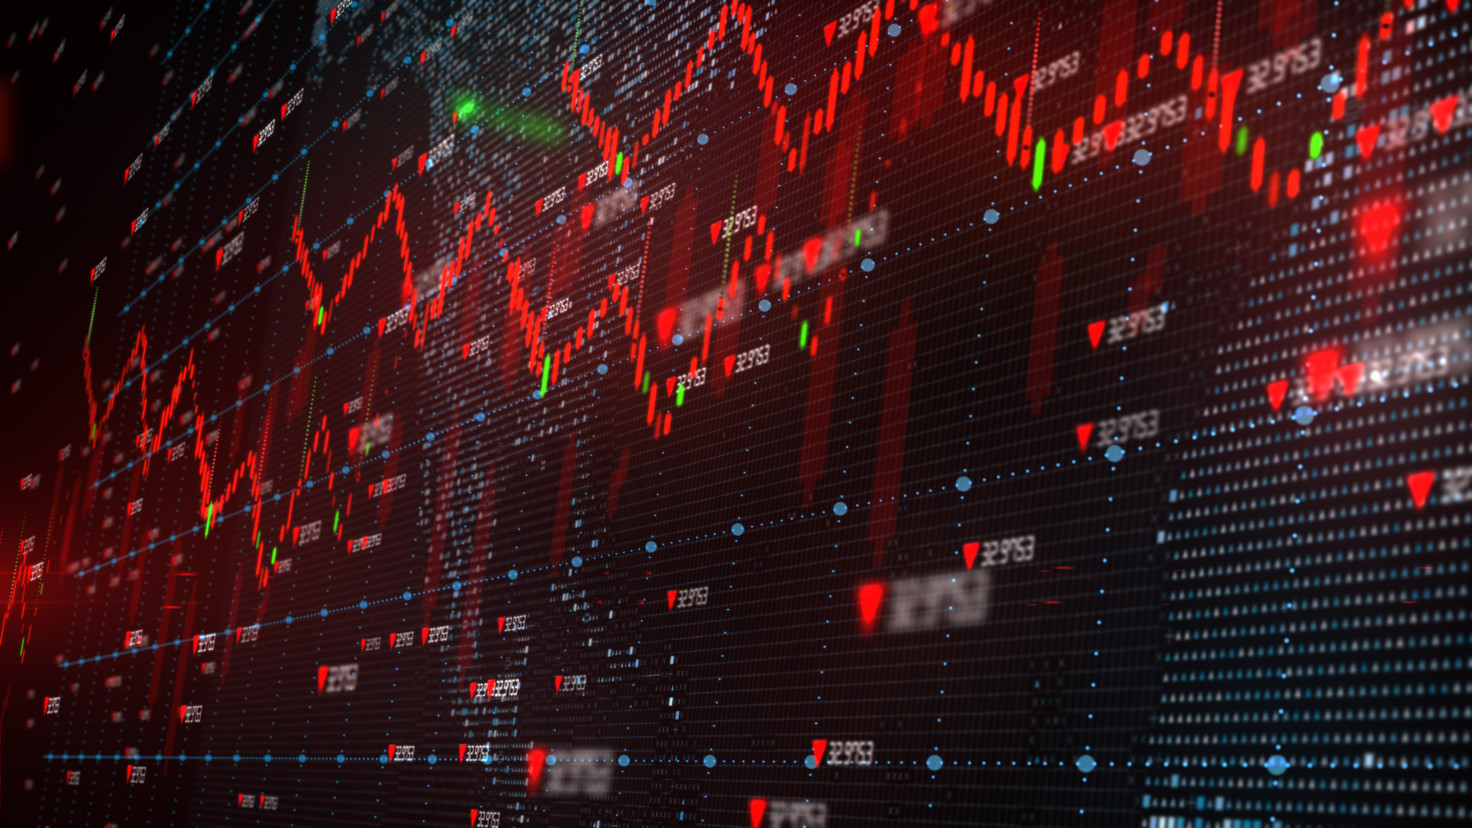 Representative Image of a stock market board depicting trends